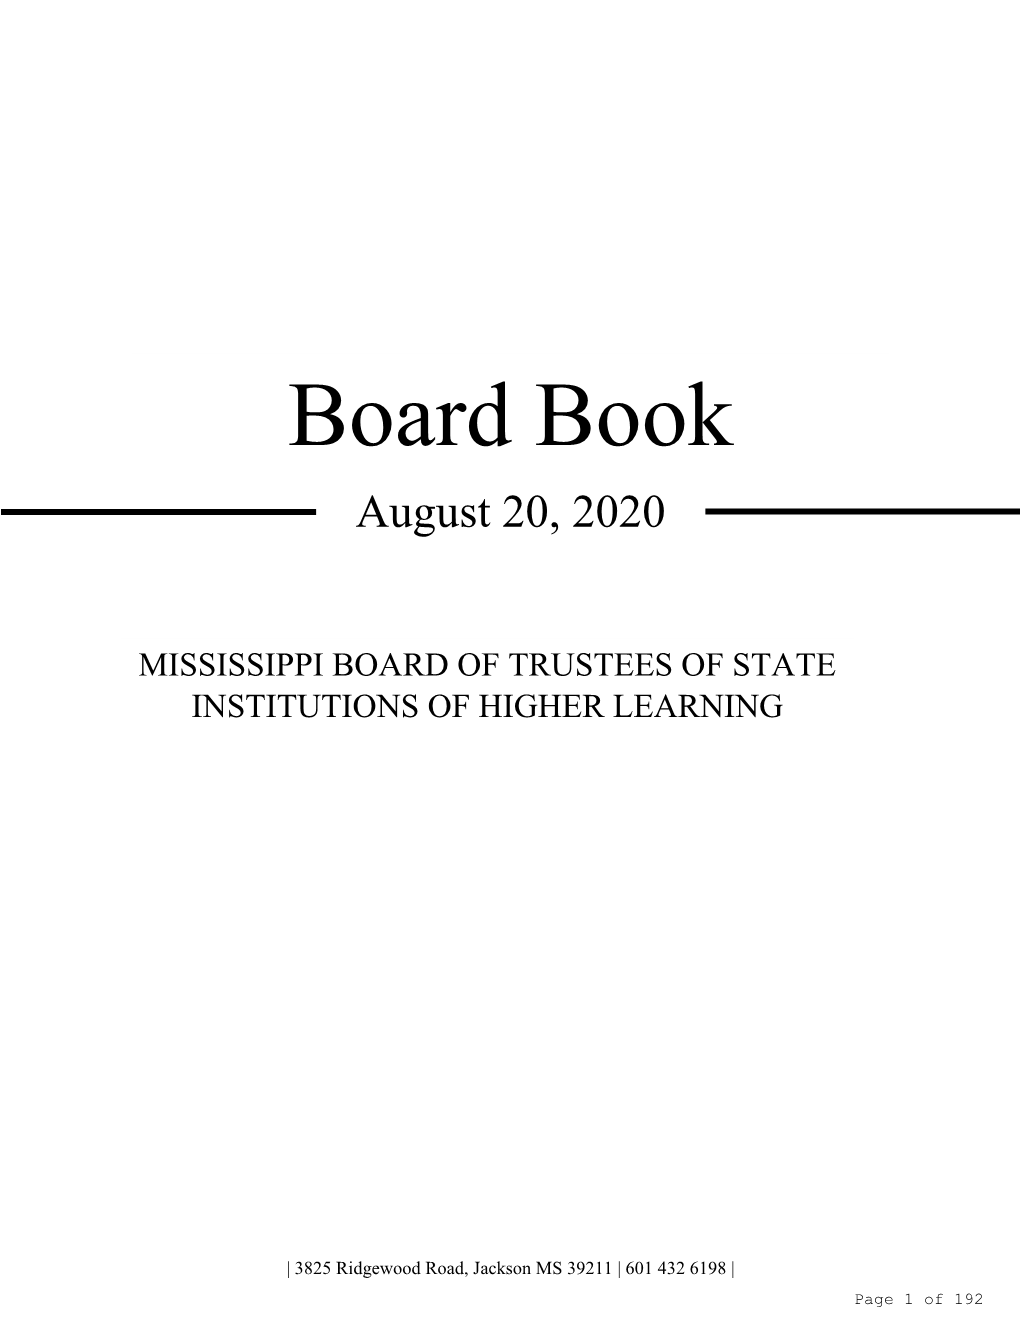 Board Book August 20, 2020